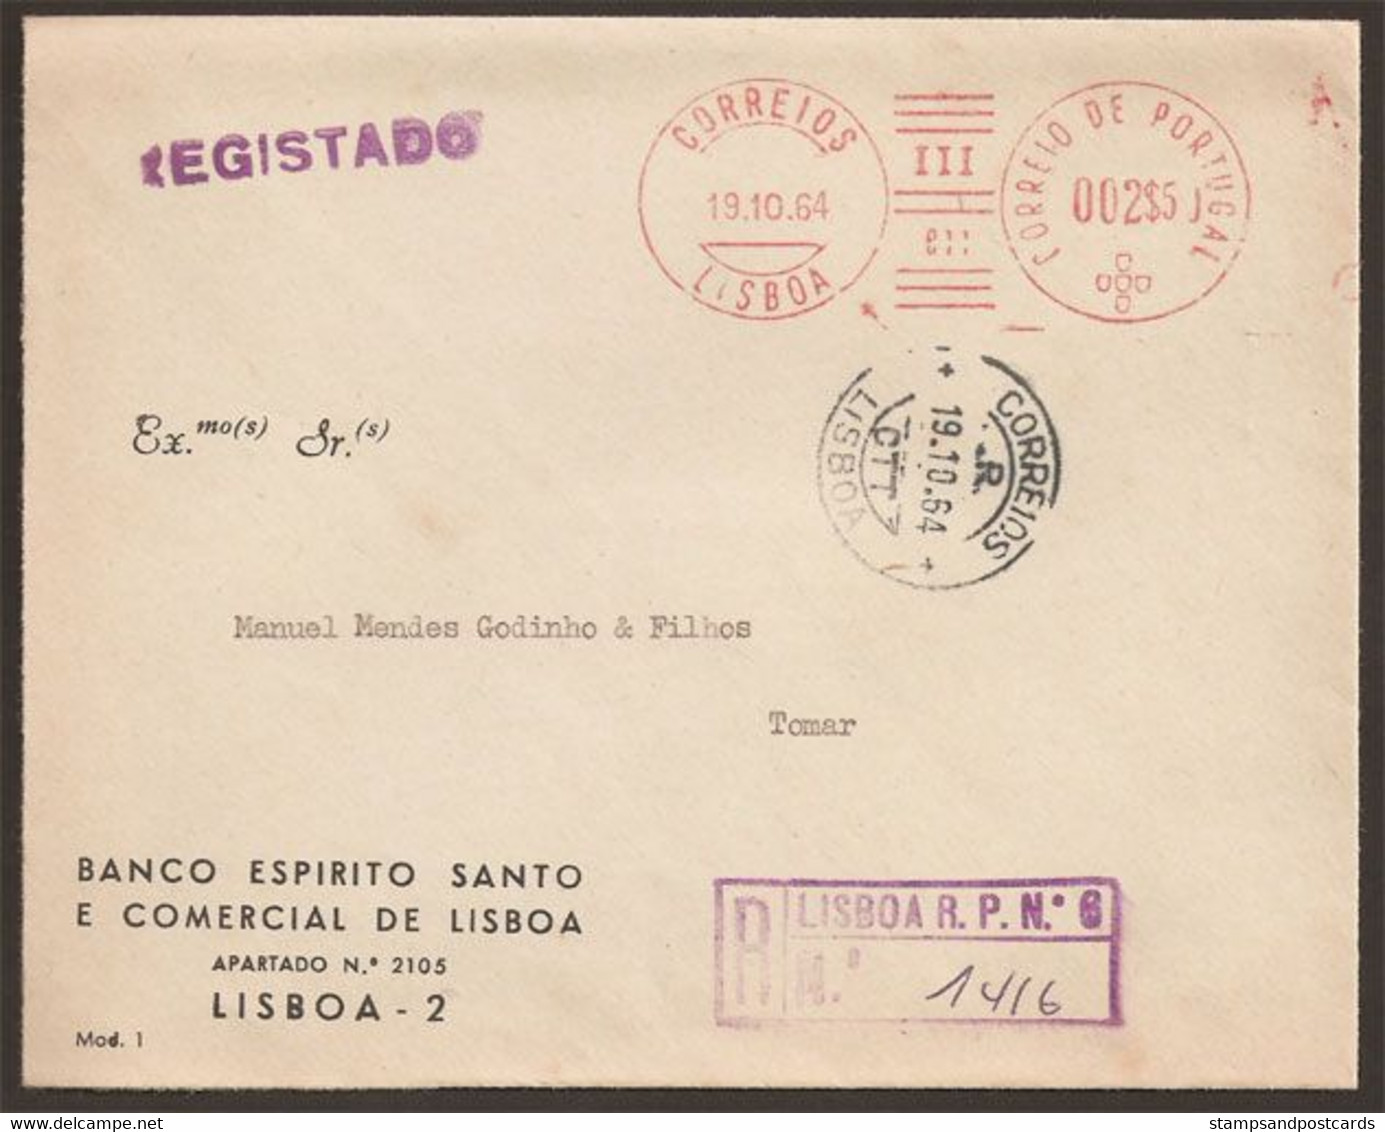 Portugal EMA Cachet Rouge Banque BESCL 1964 Recommandée Privé Nº 6 Meter Stamp BESCL Bank Private Registration Nº 6 - Maschinenstempel (EMA)